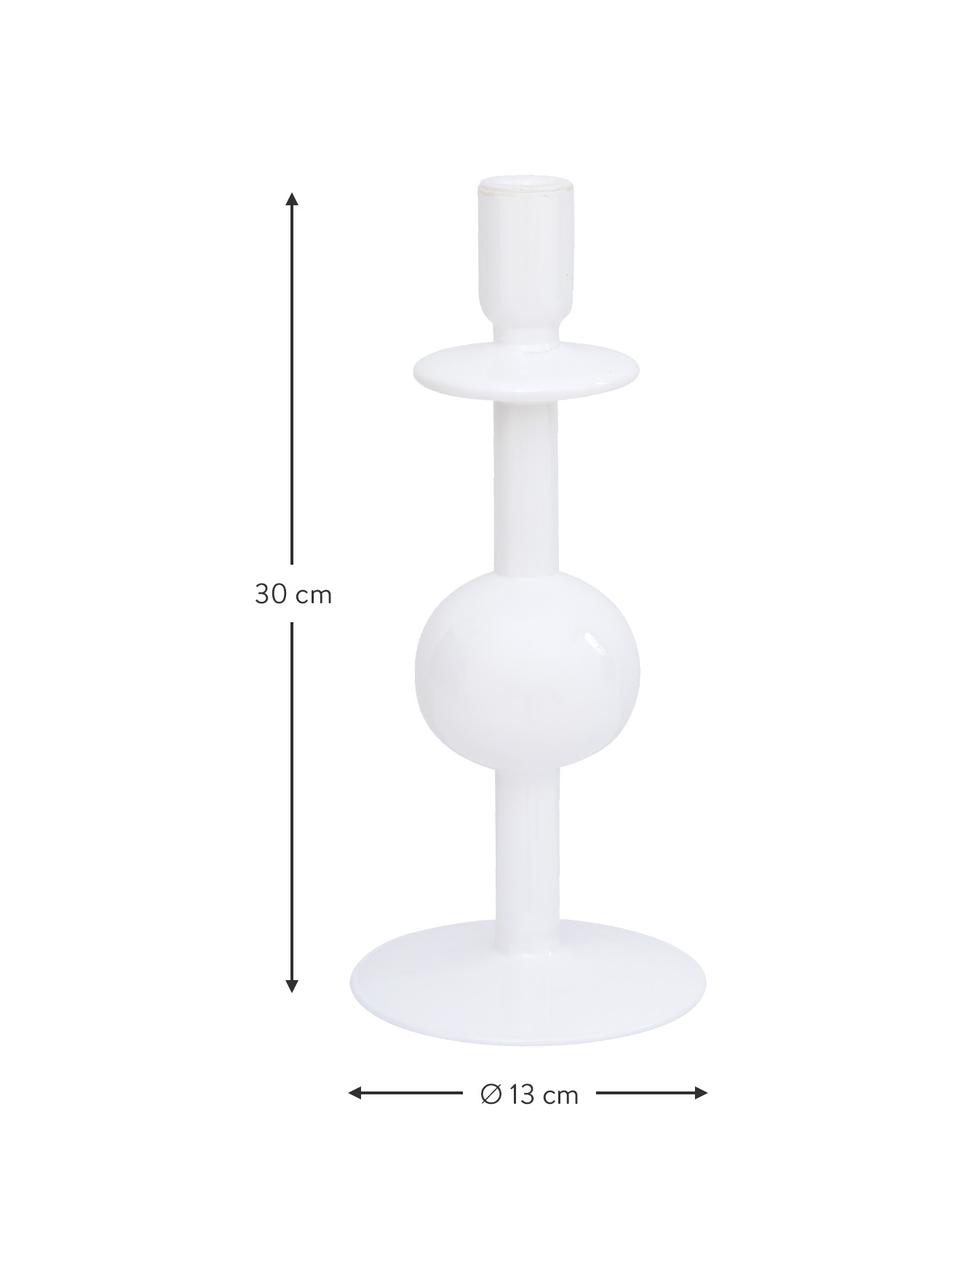 Kerzenhalter Bulb aus recyceltem Glas in Weiss, 2 Stück, Recyceltes Glas, Weiss, glänzend, Ø 13 x H 30 cm